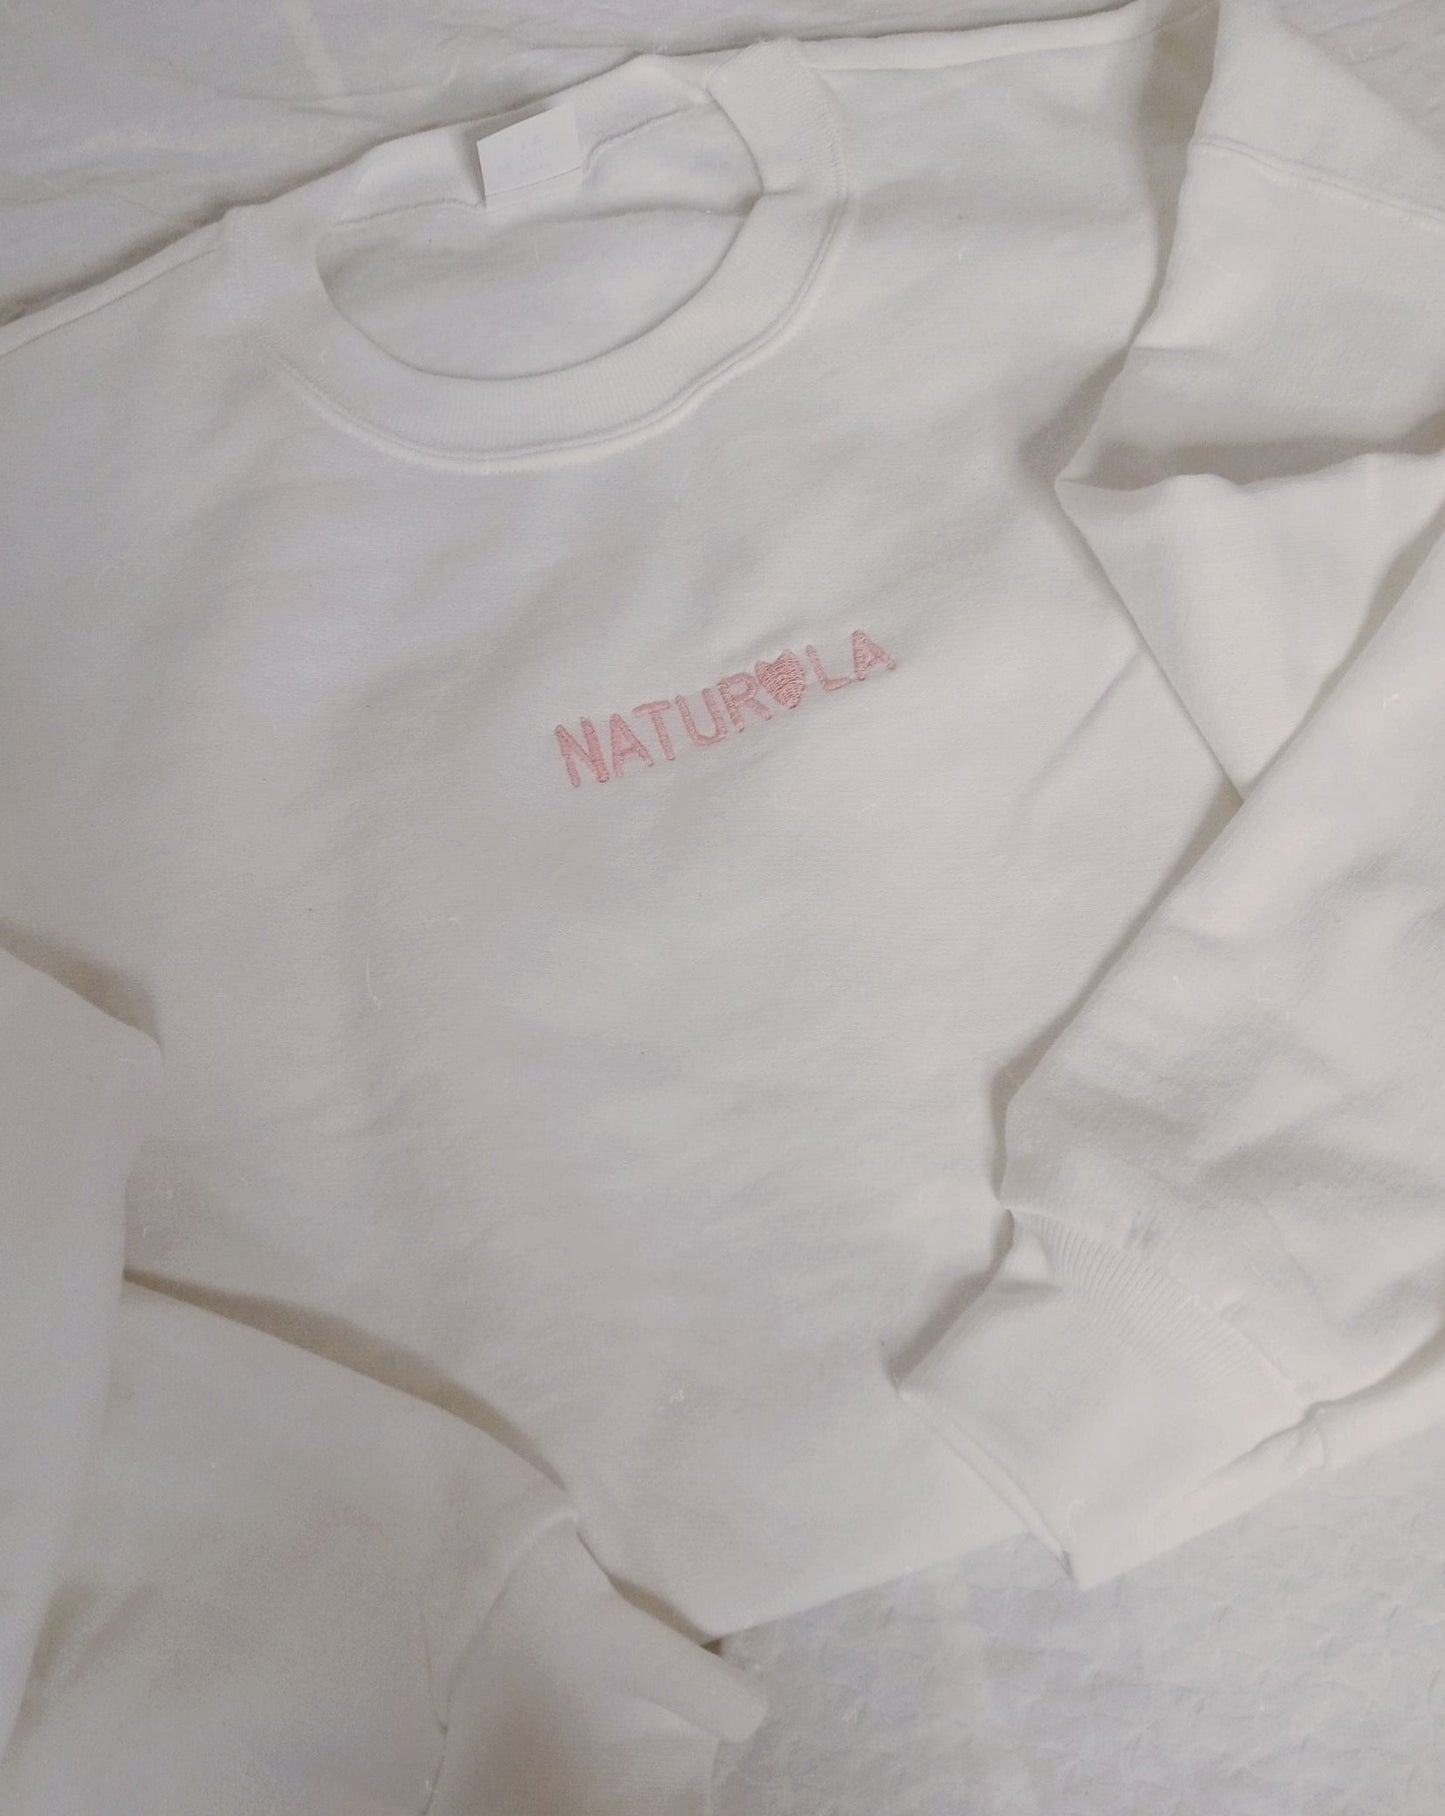 NATUROLA sweatshirt